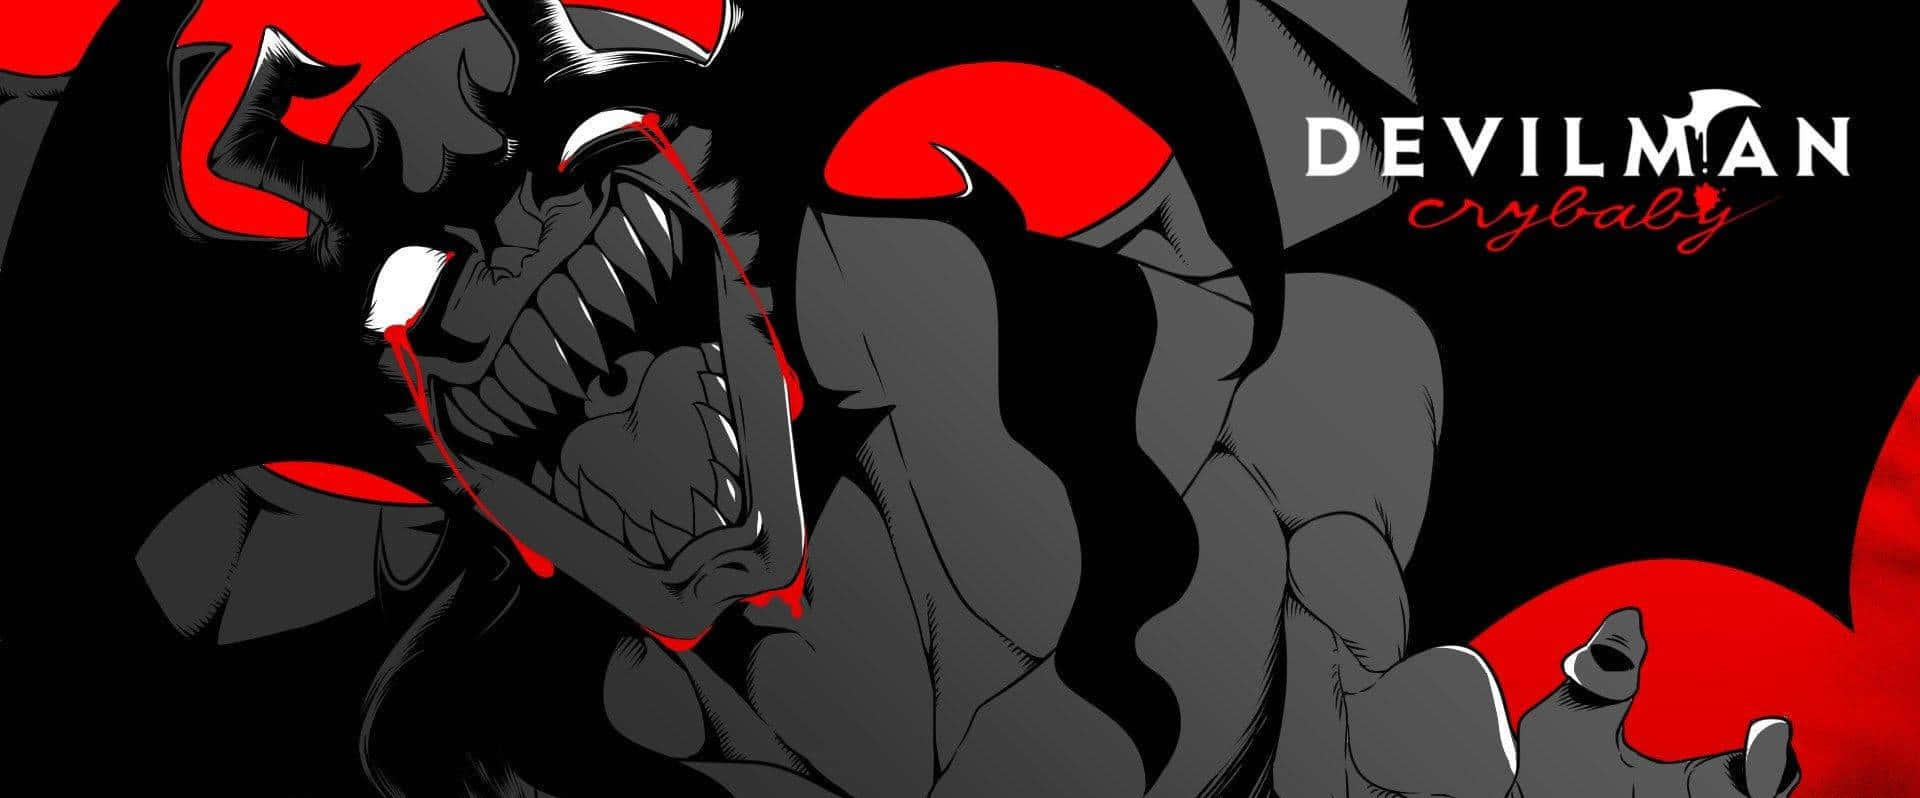 Devilman Crybaby Amon Character Art Wallpaper